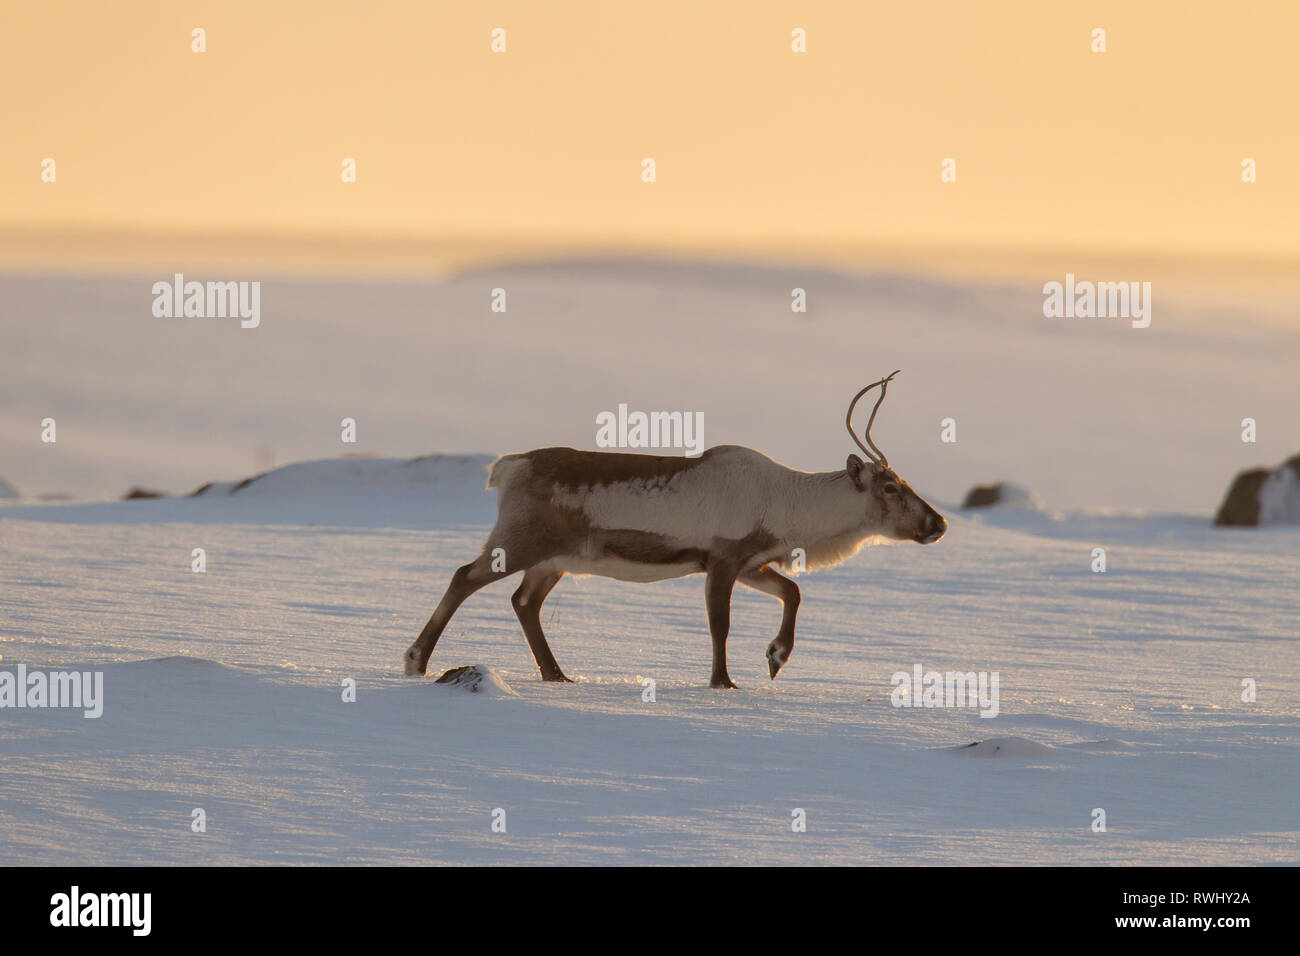 Reindeer (Rangifer tarandus). Adult walking in snowy landscape. Iceland Stock Photo